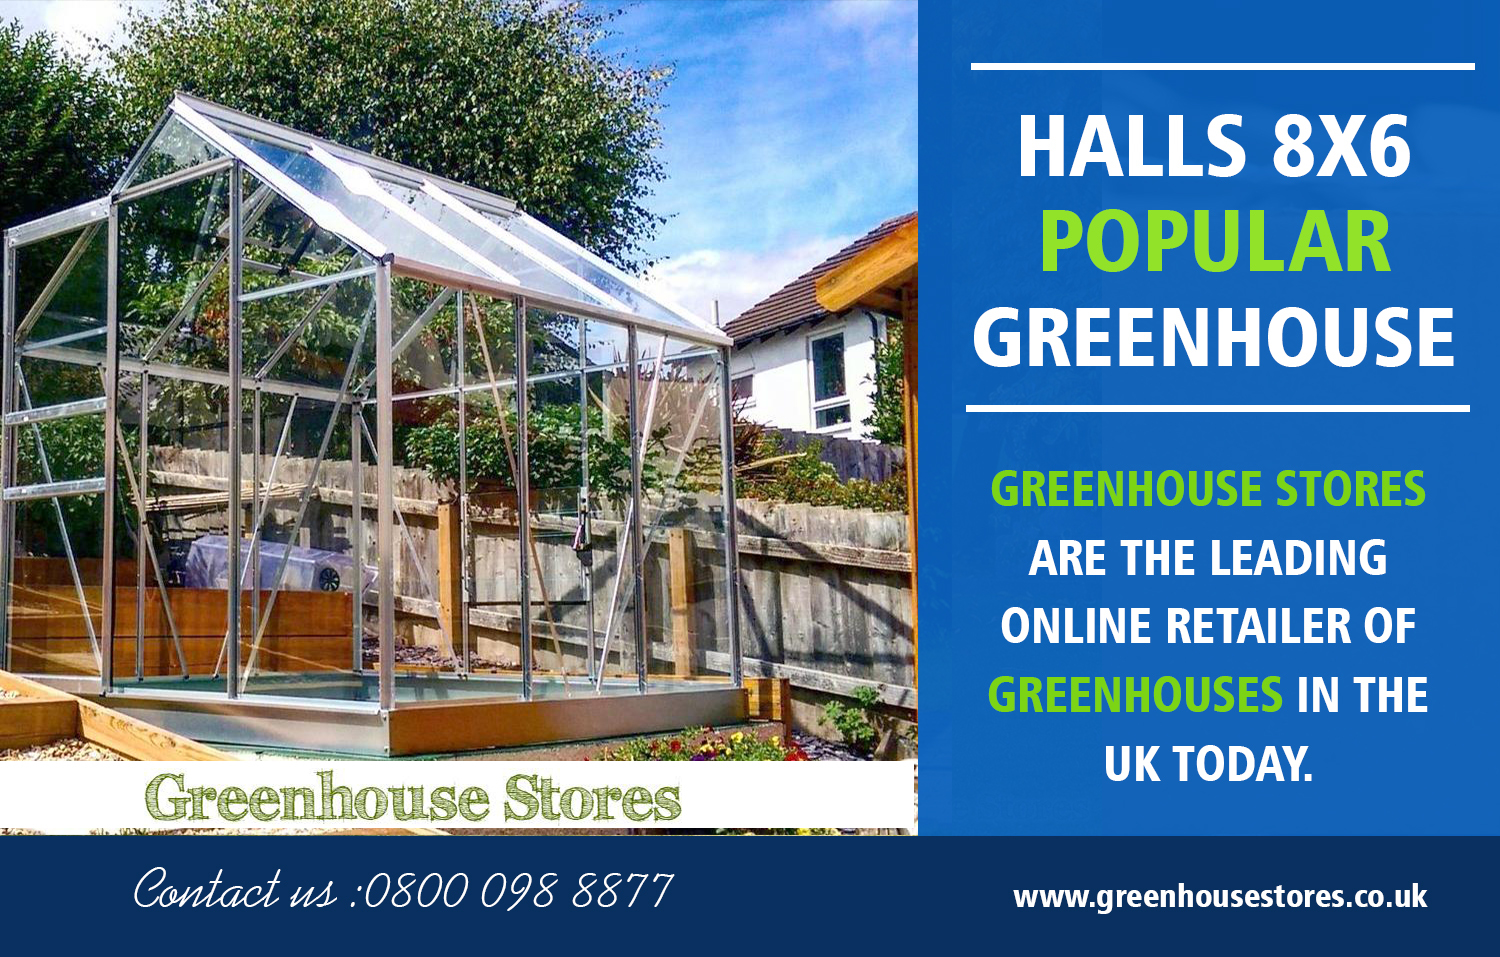 Halls 8x6 Popular Greenhouse | 800 098 8877 | greenhousestores.co.uk